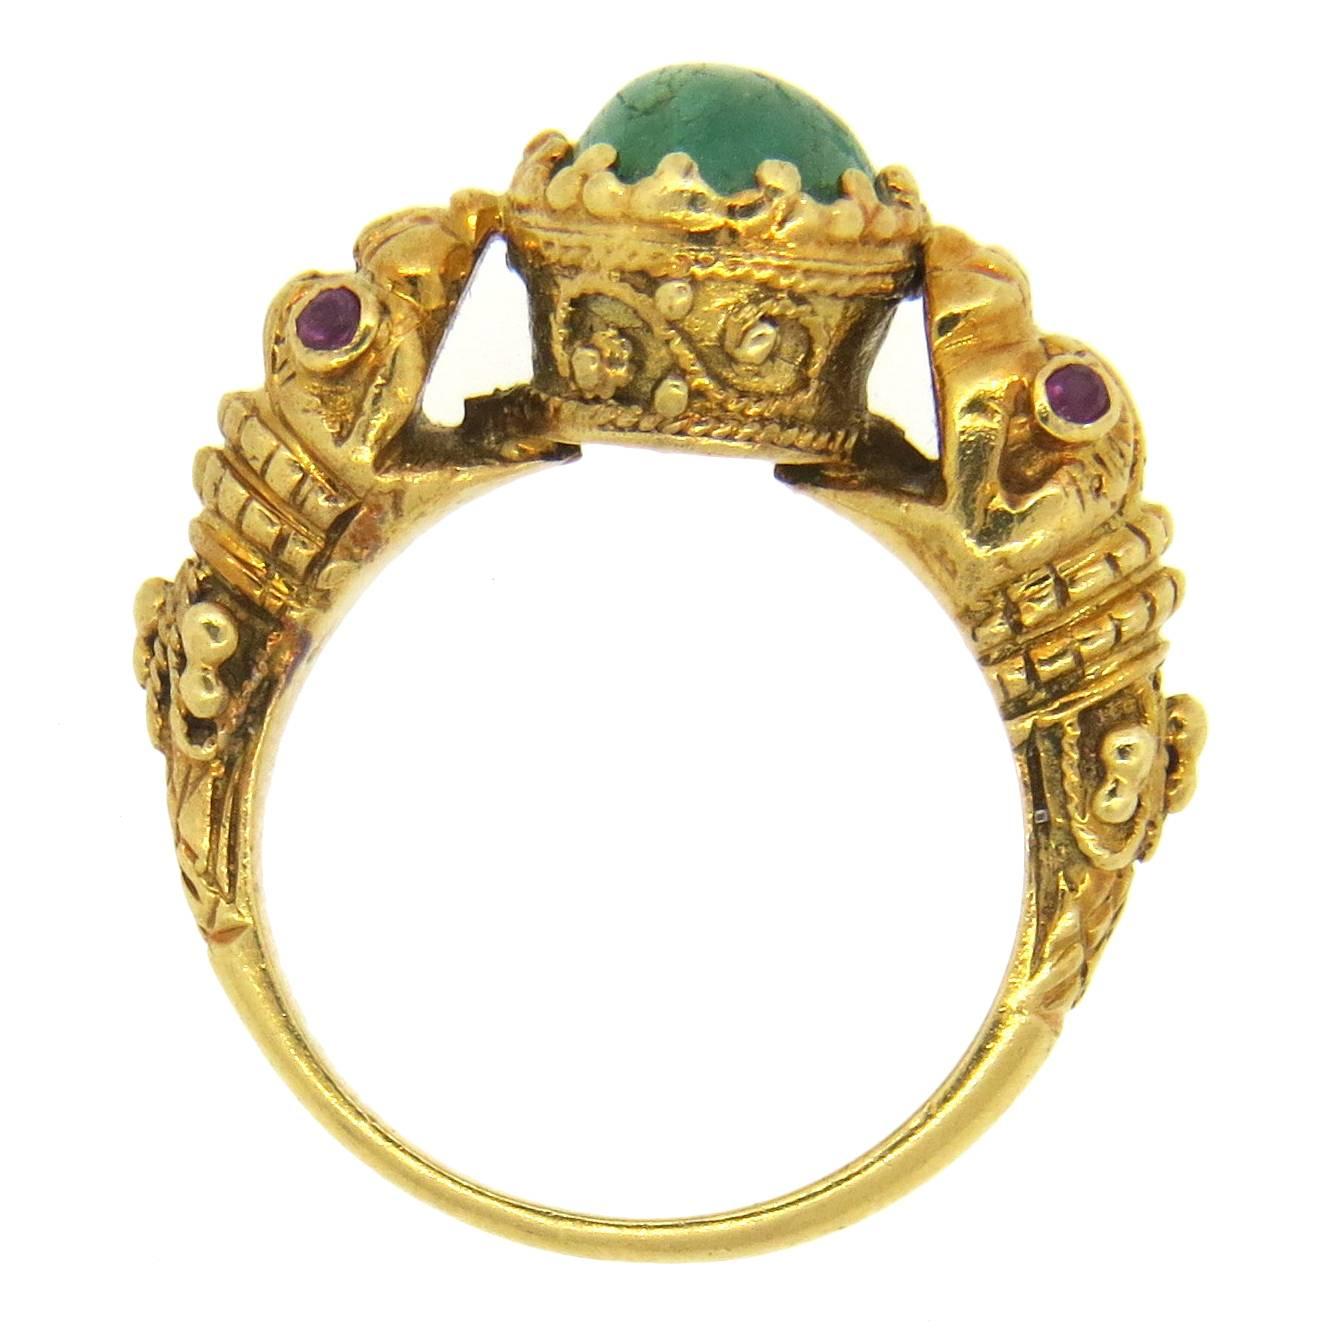 Zolotas Greece Emerald Ruby Gold Chimera  Ring